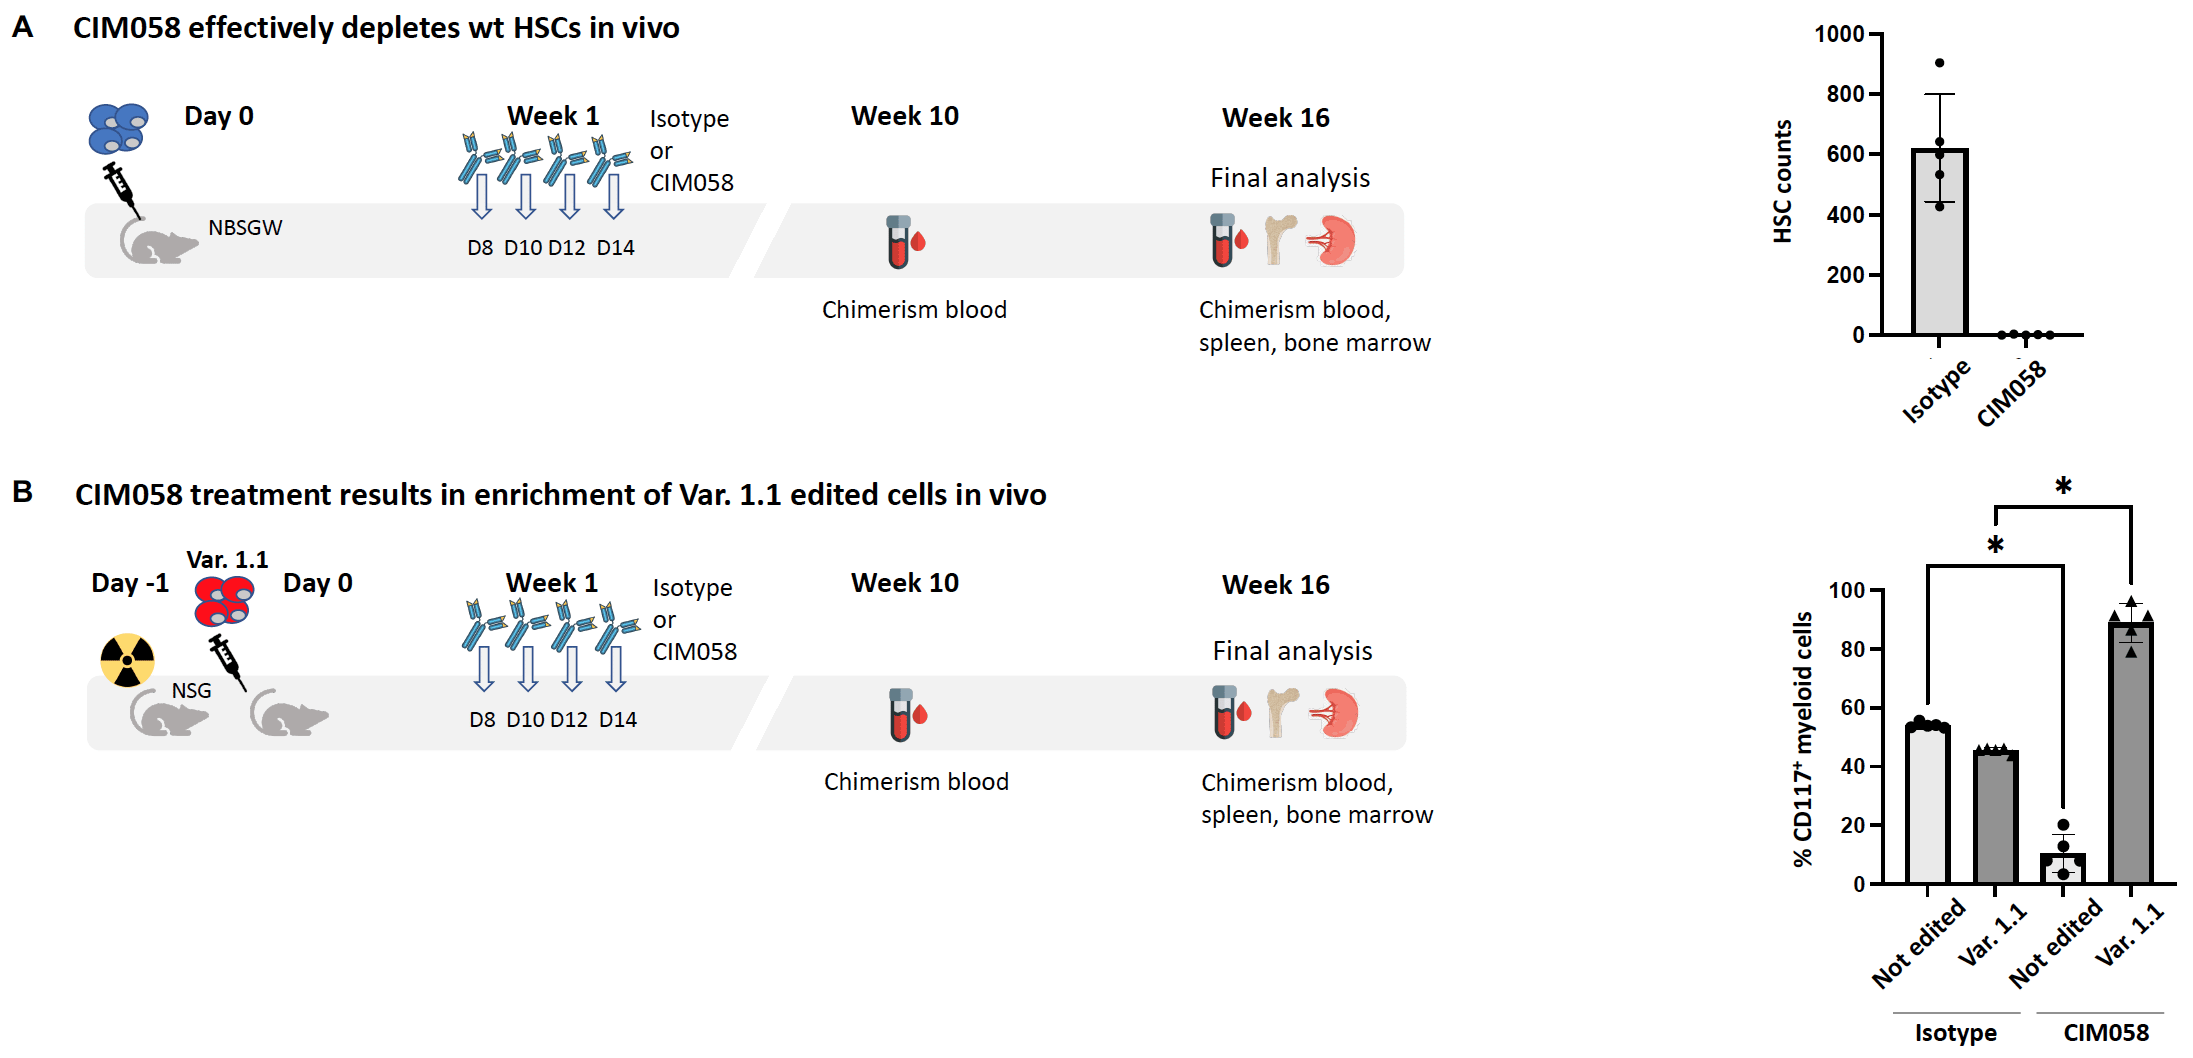 In vivo CIM058-mediated HSPC depletion and engraftment + shielding of HSPC Var.1.1